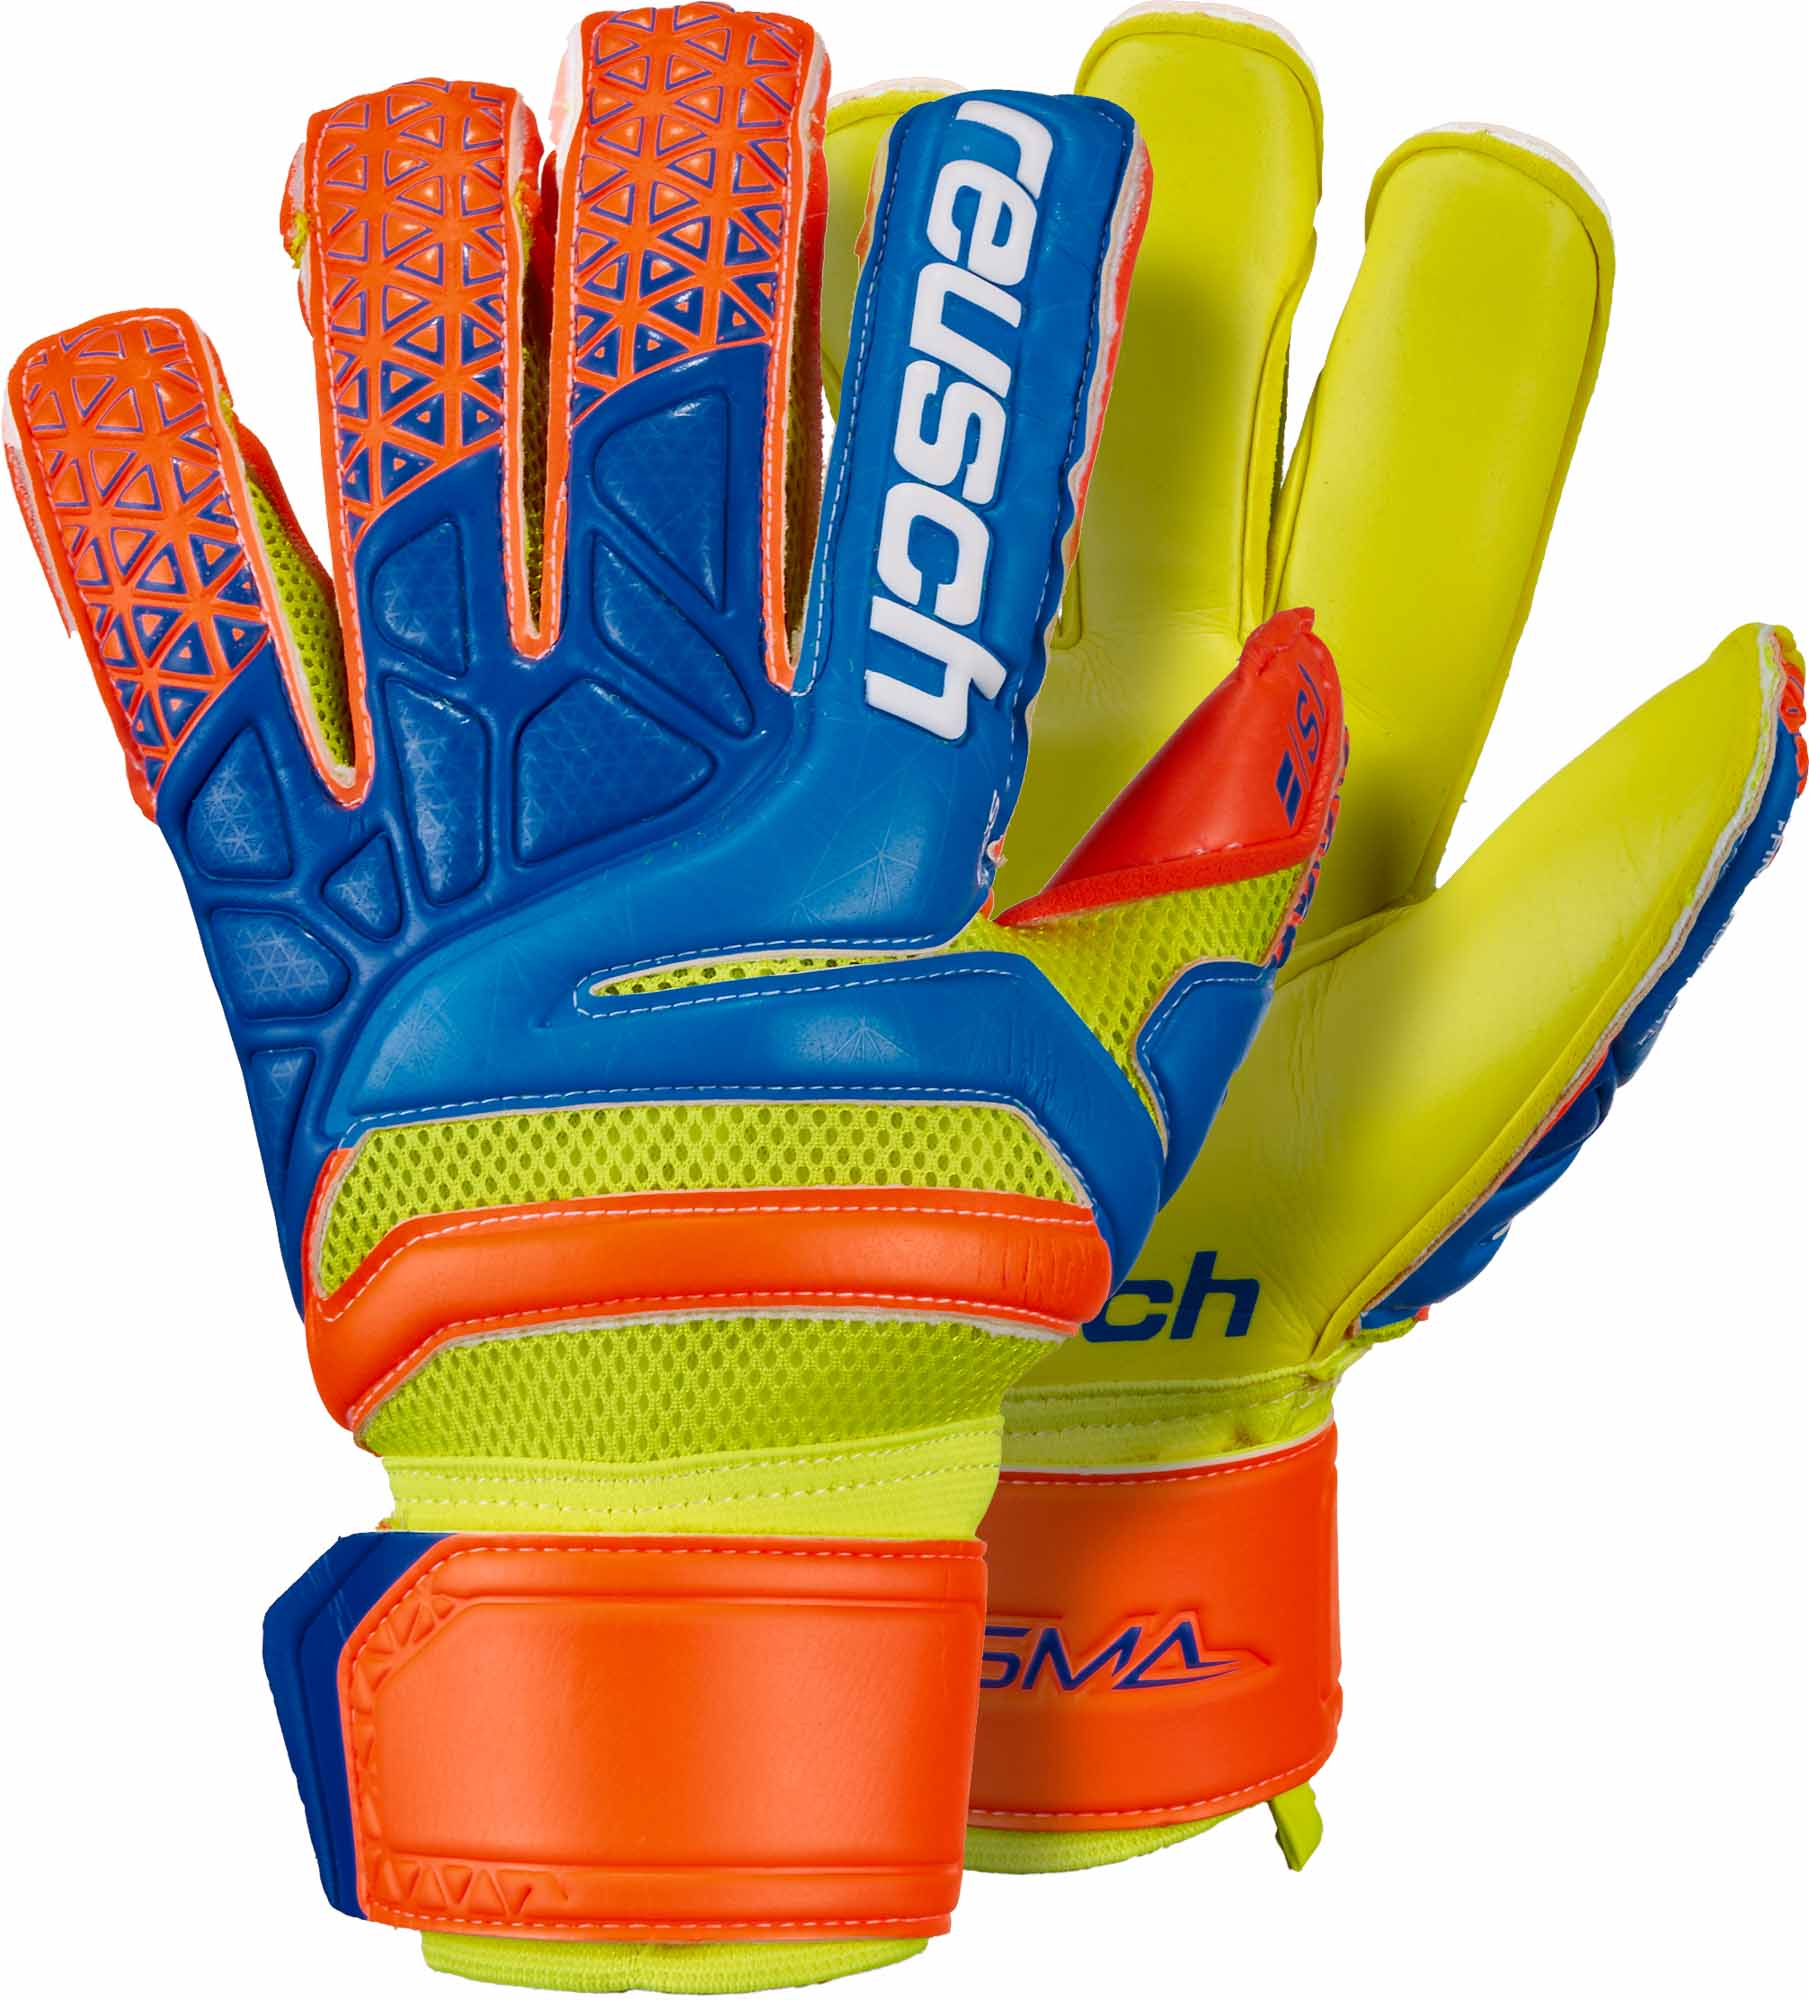 Reusch Prisma Prime S1 Finger Support Goalkeeper Glove